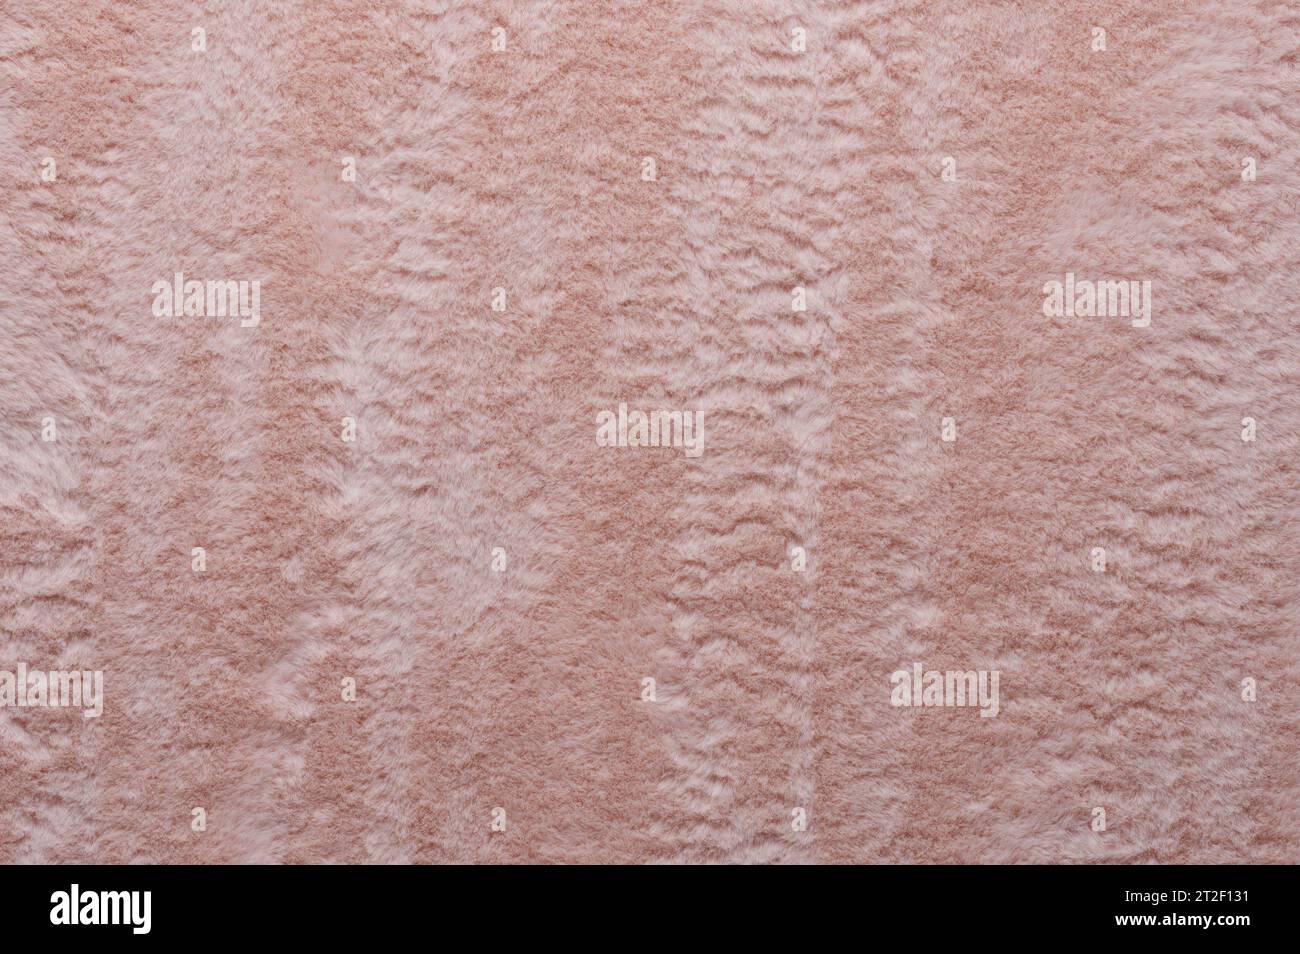 Pattern of pink cotton carpet macro close up view Stock Photo